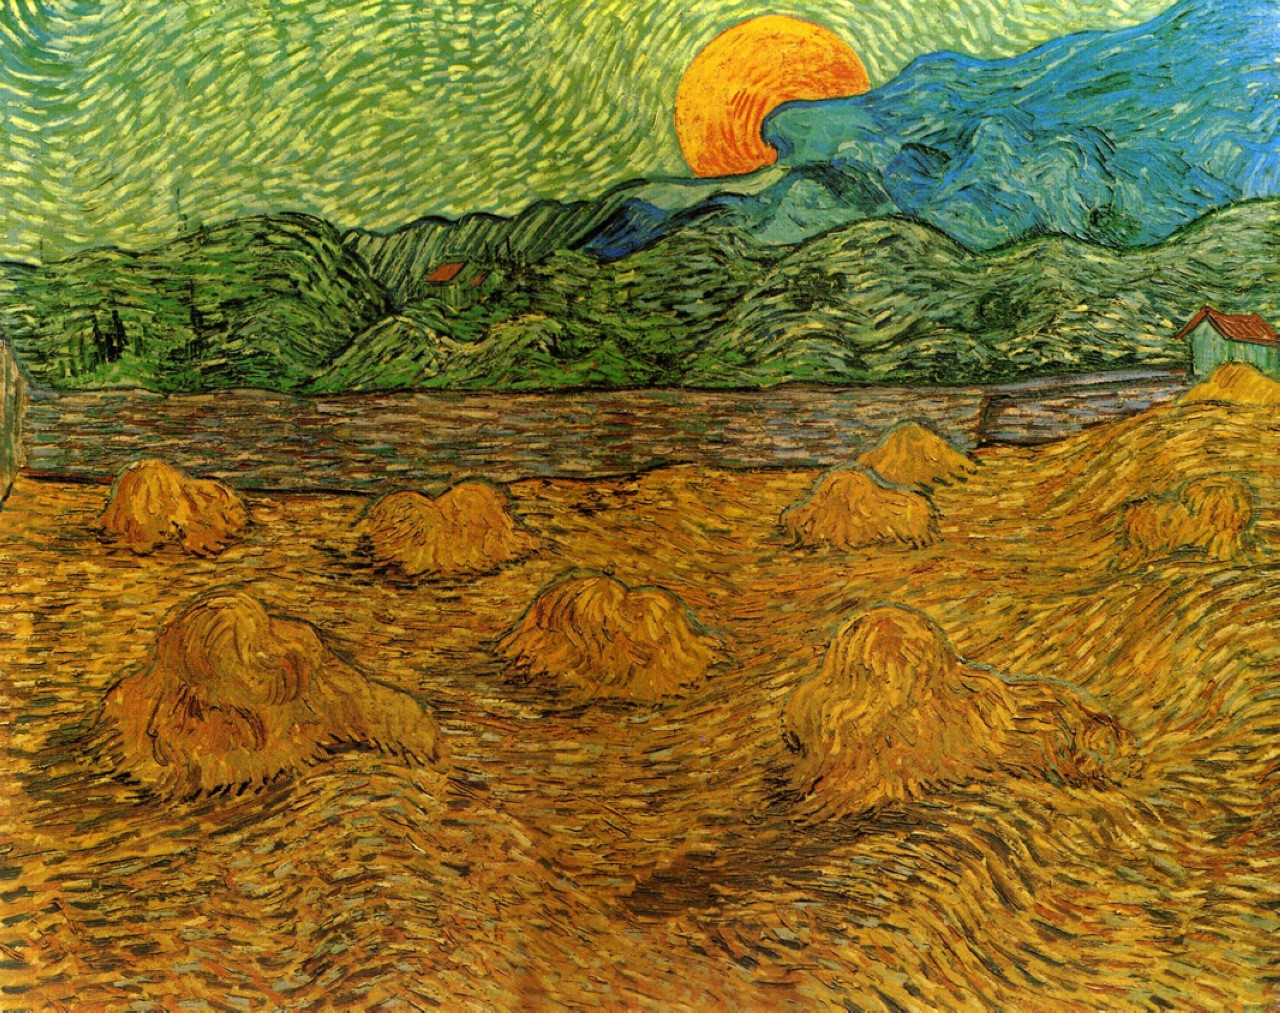 Best ideas about Van Gogh Landscape
. Save or Pin Vincent van Gogh on Pinterest Now.